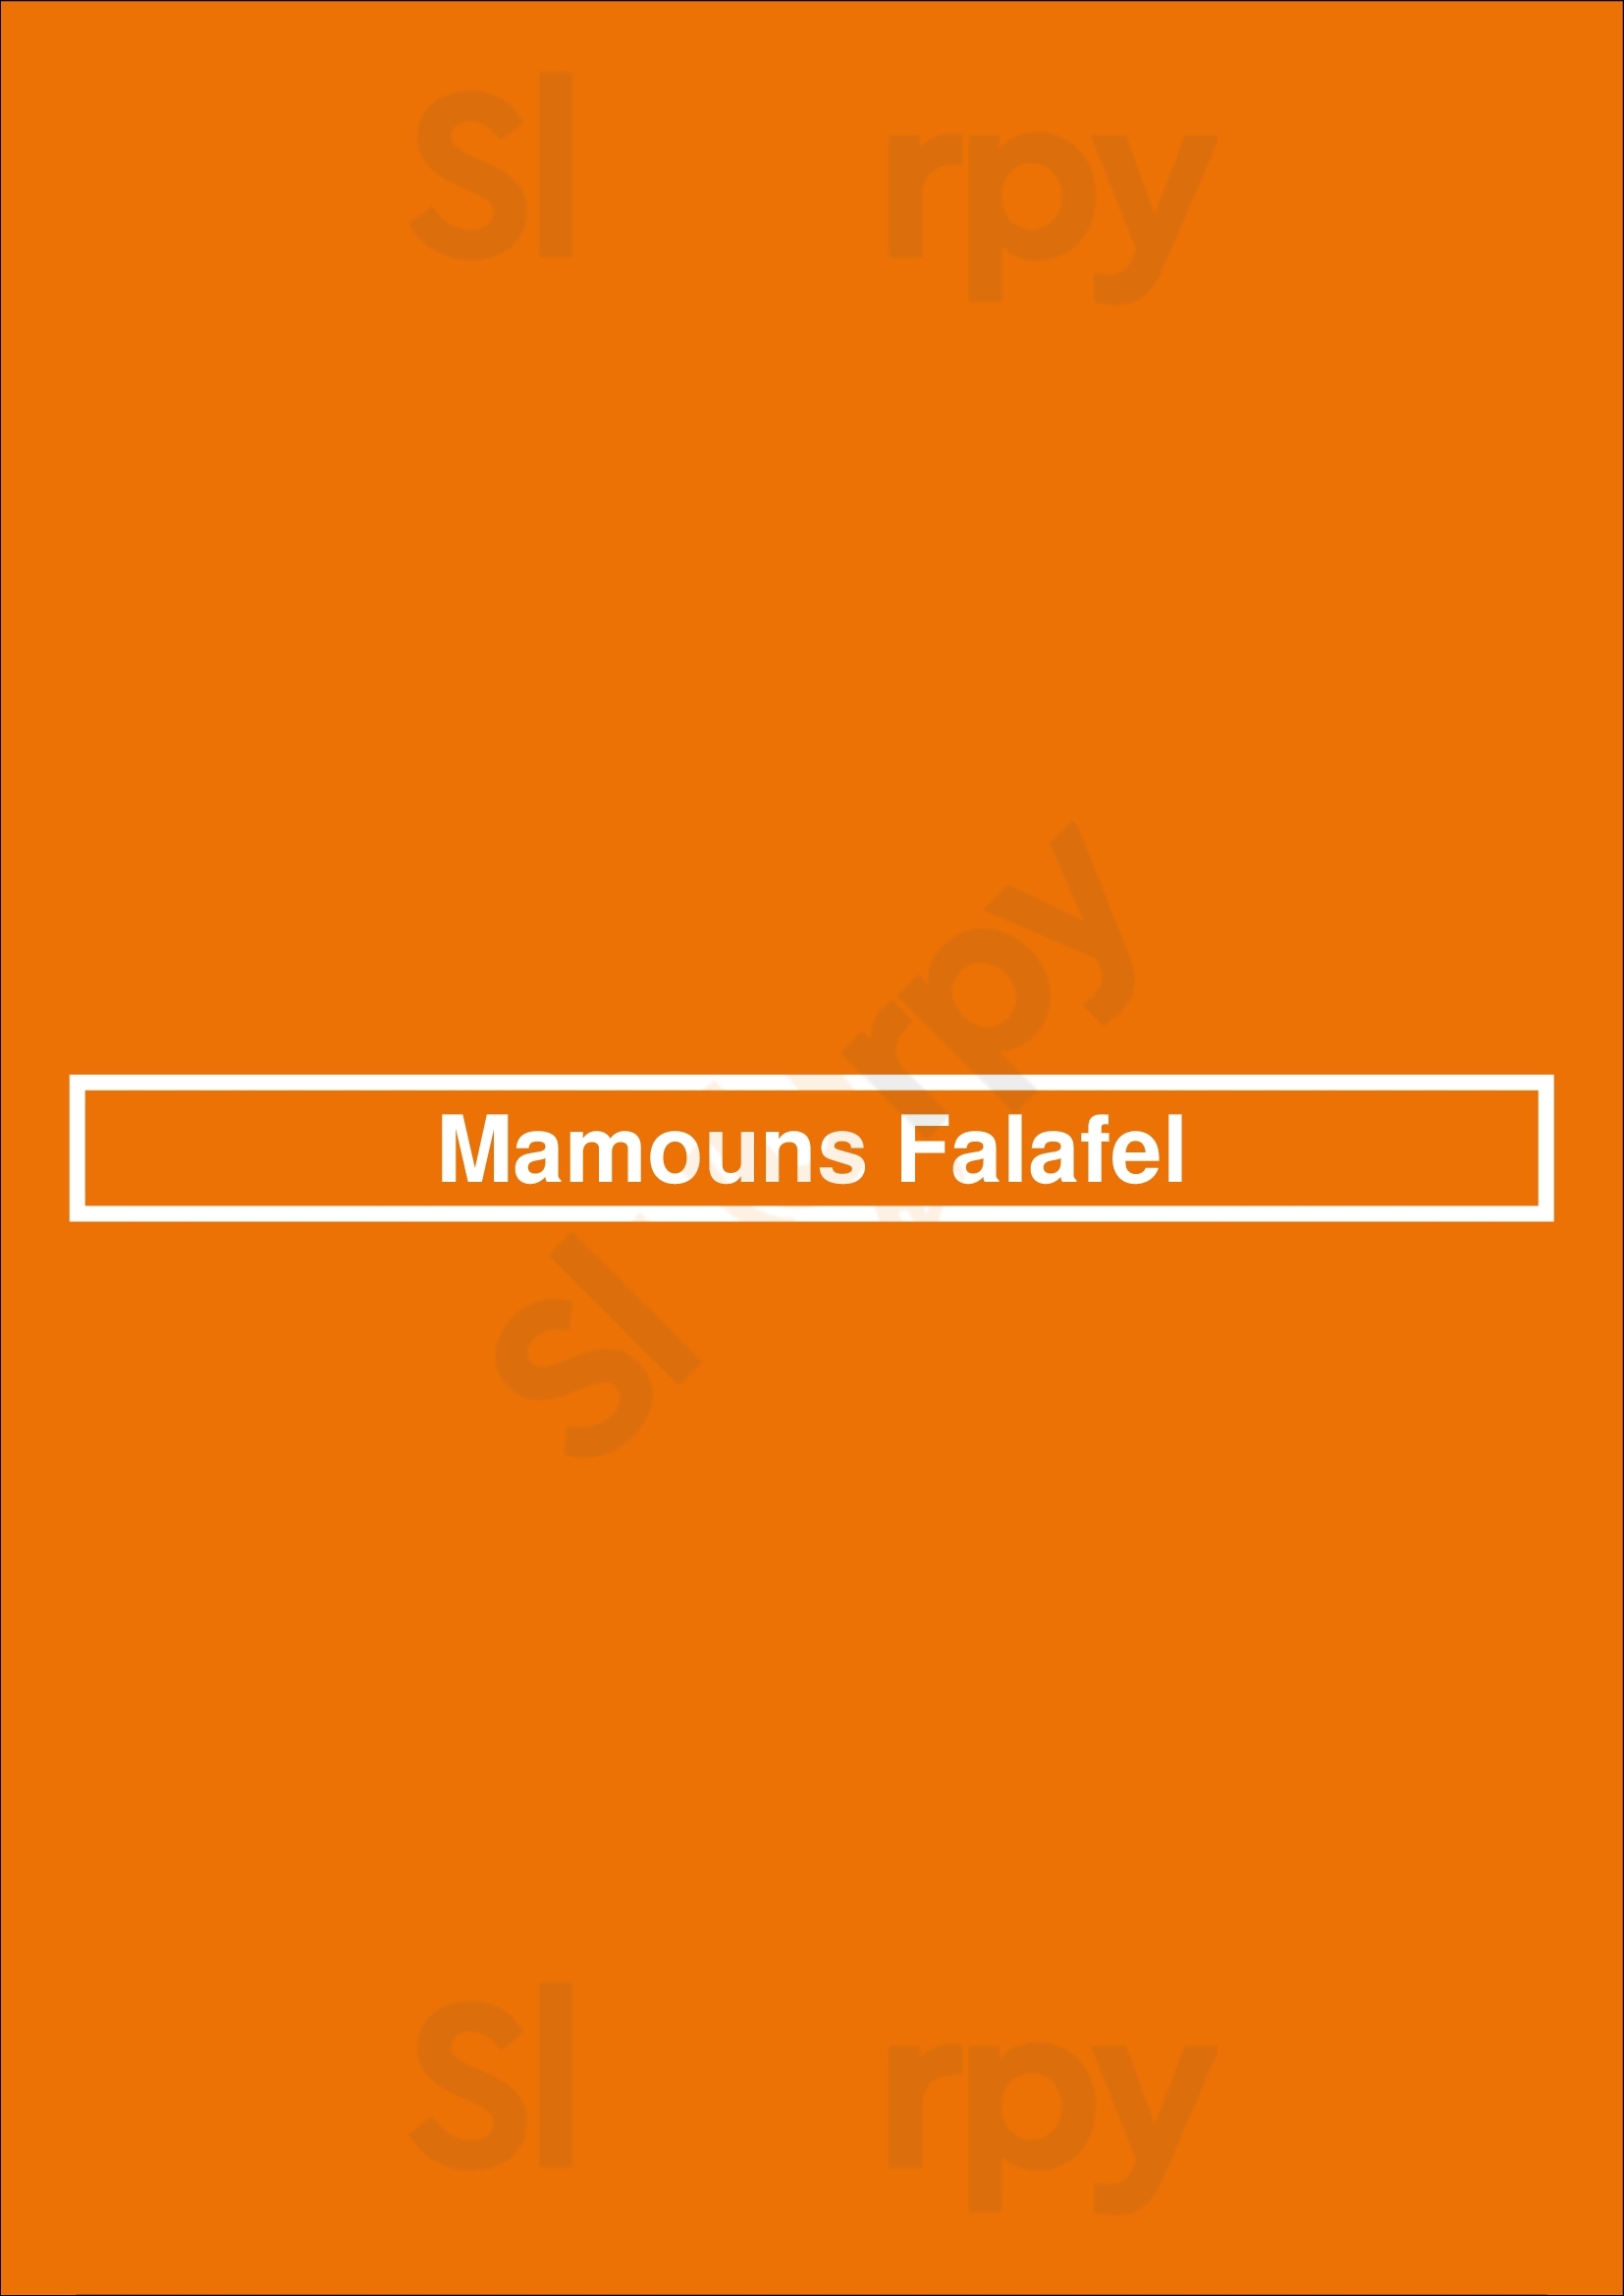 Mamouns Falafel Philadelphia Menu - 1